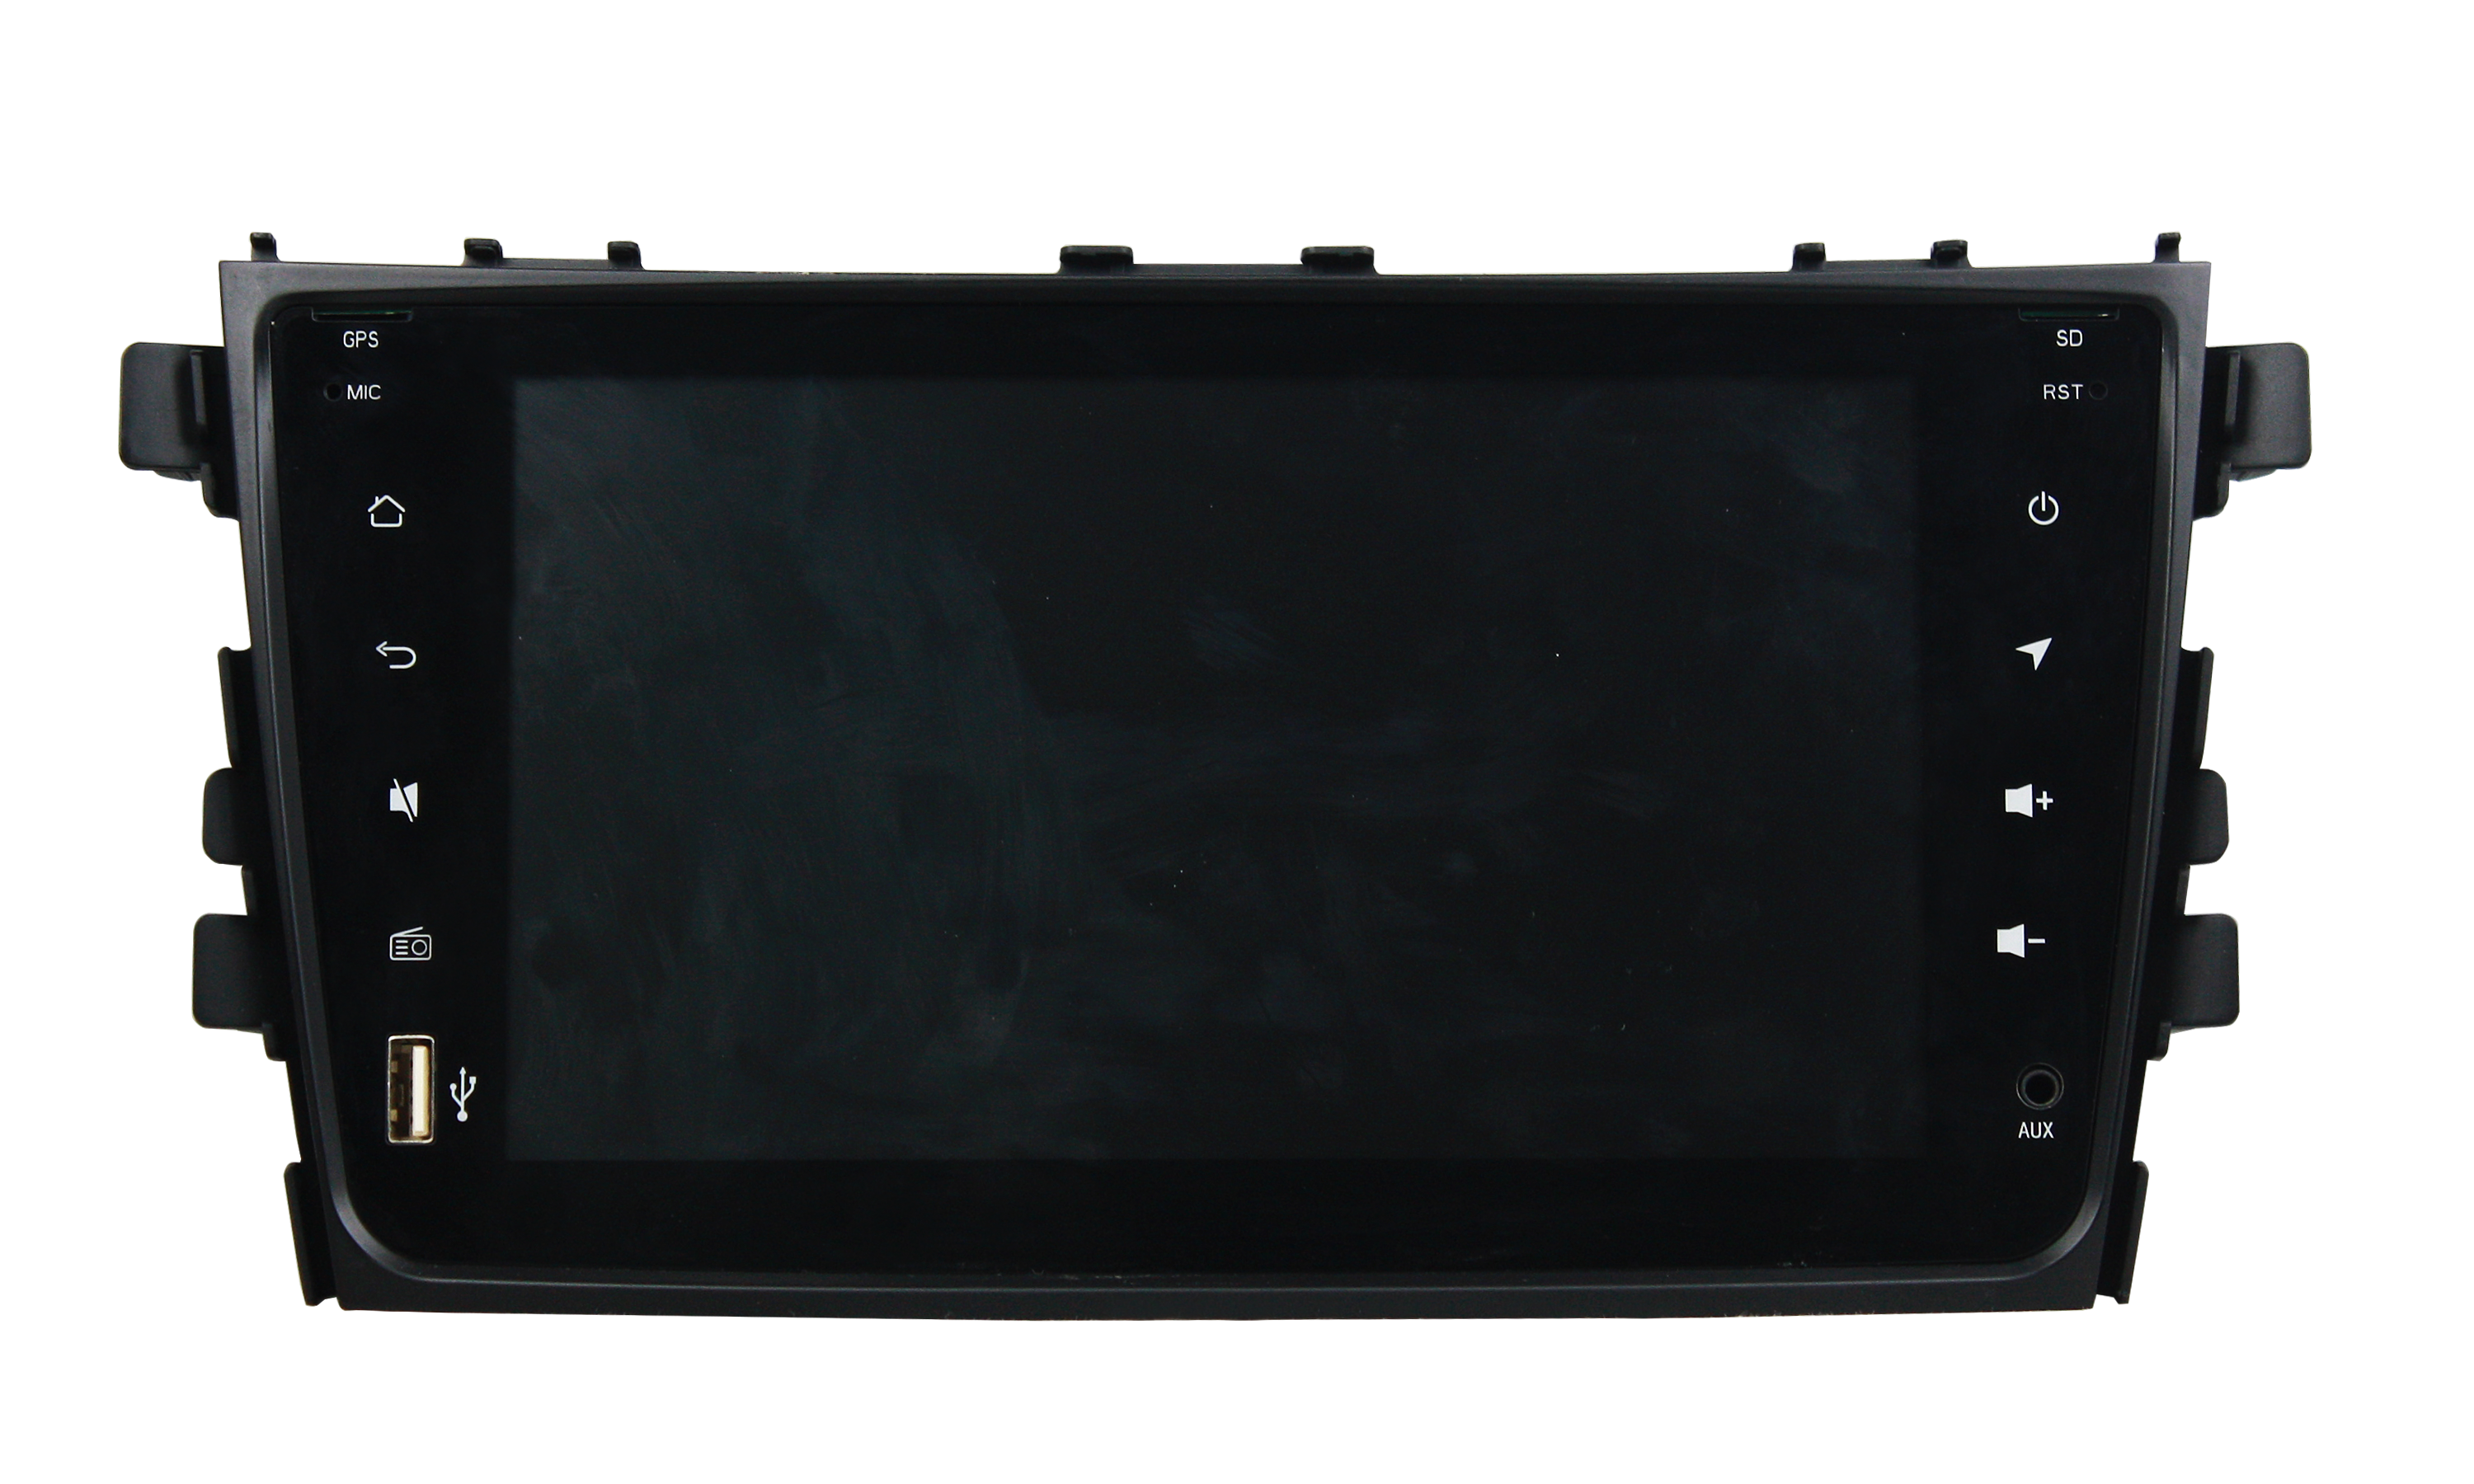 KD-8243 OEM car stereo dual touch screen car navigation for Suzuki Alto/Celerio/Cultus